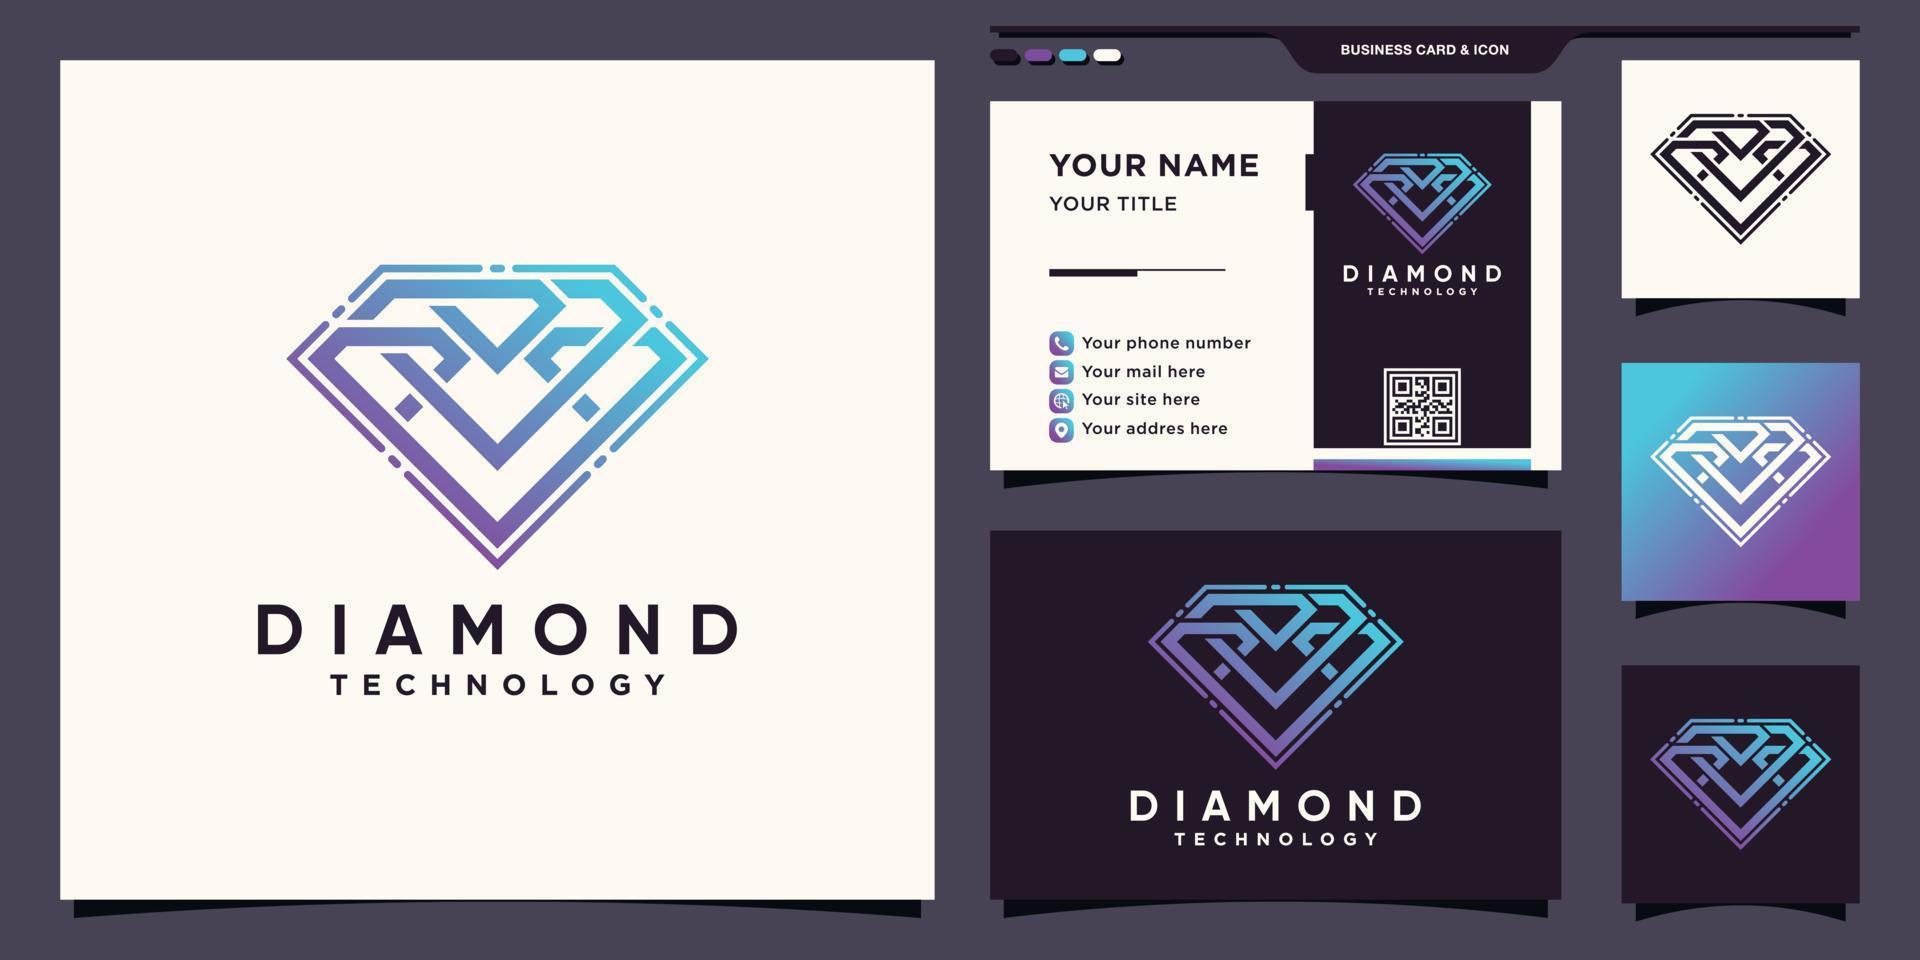 Creative diamond technology logo with modern line art style and business card deisgn vector